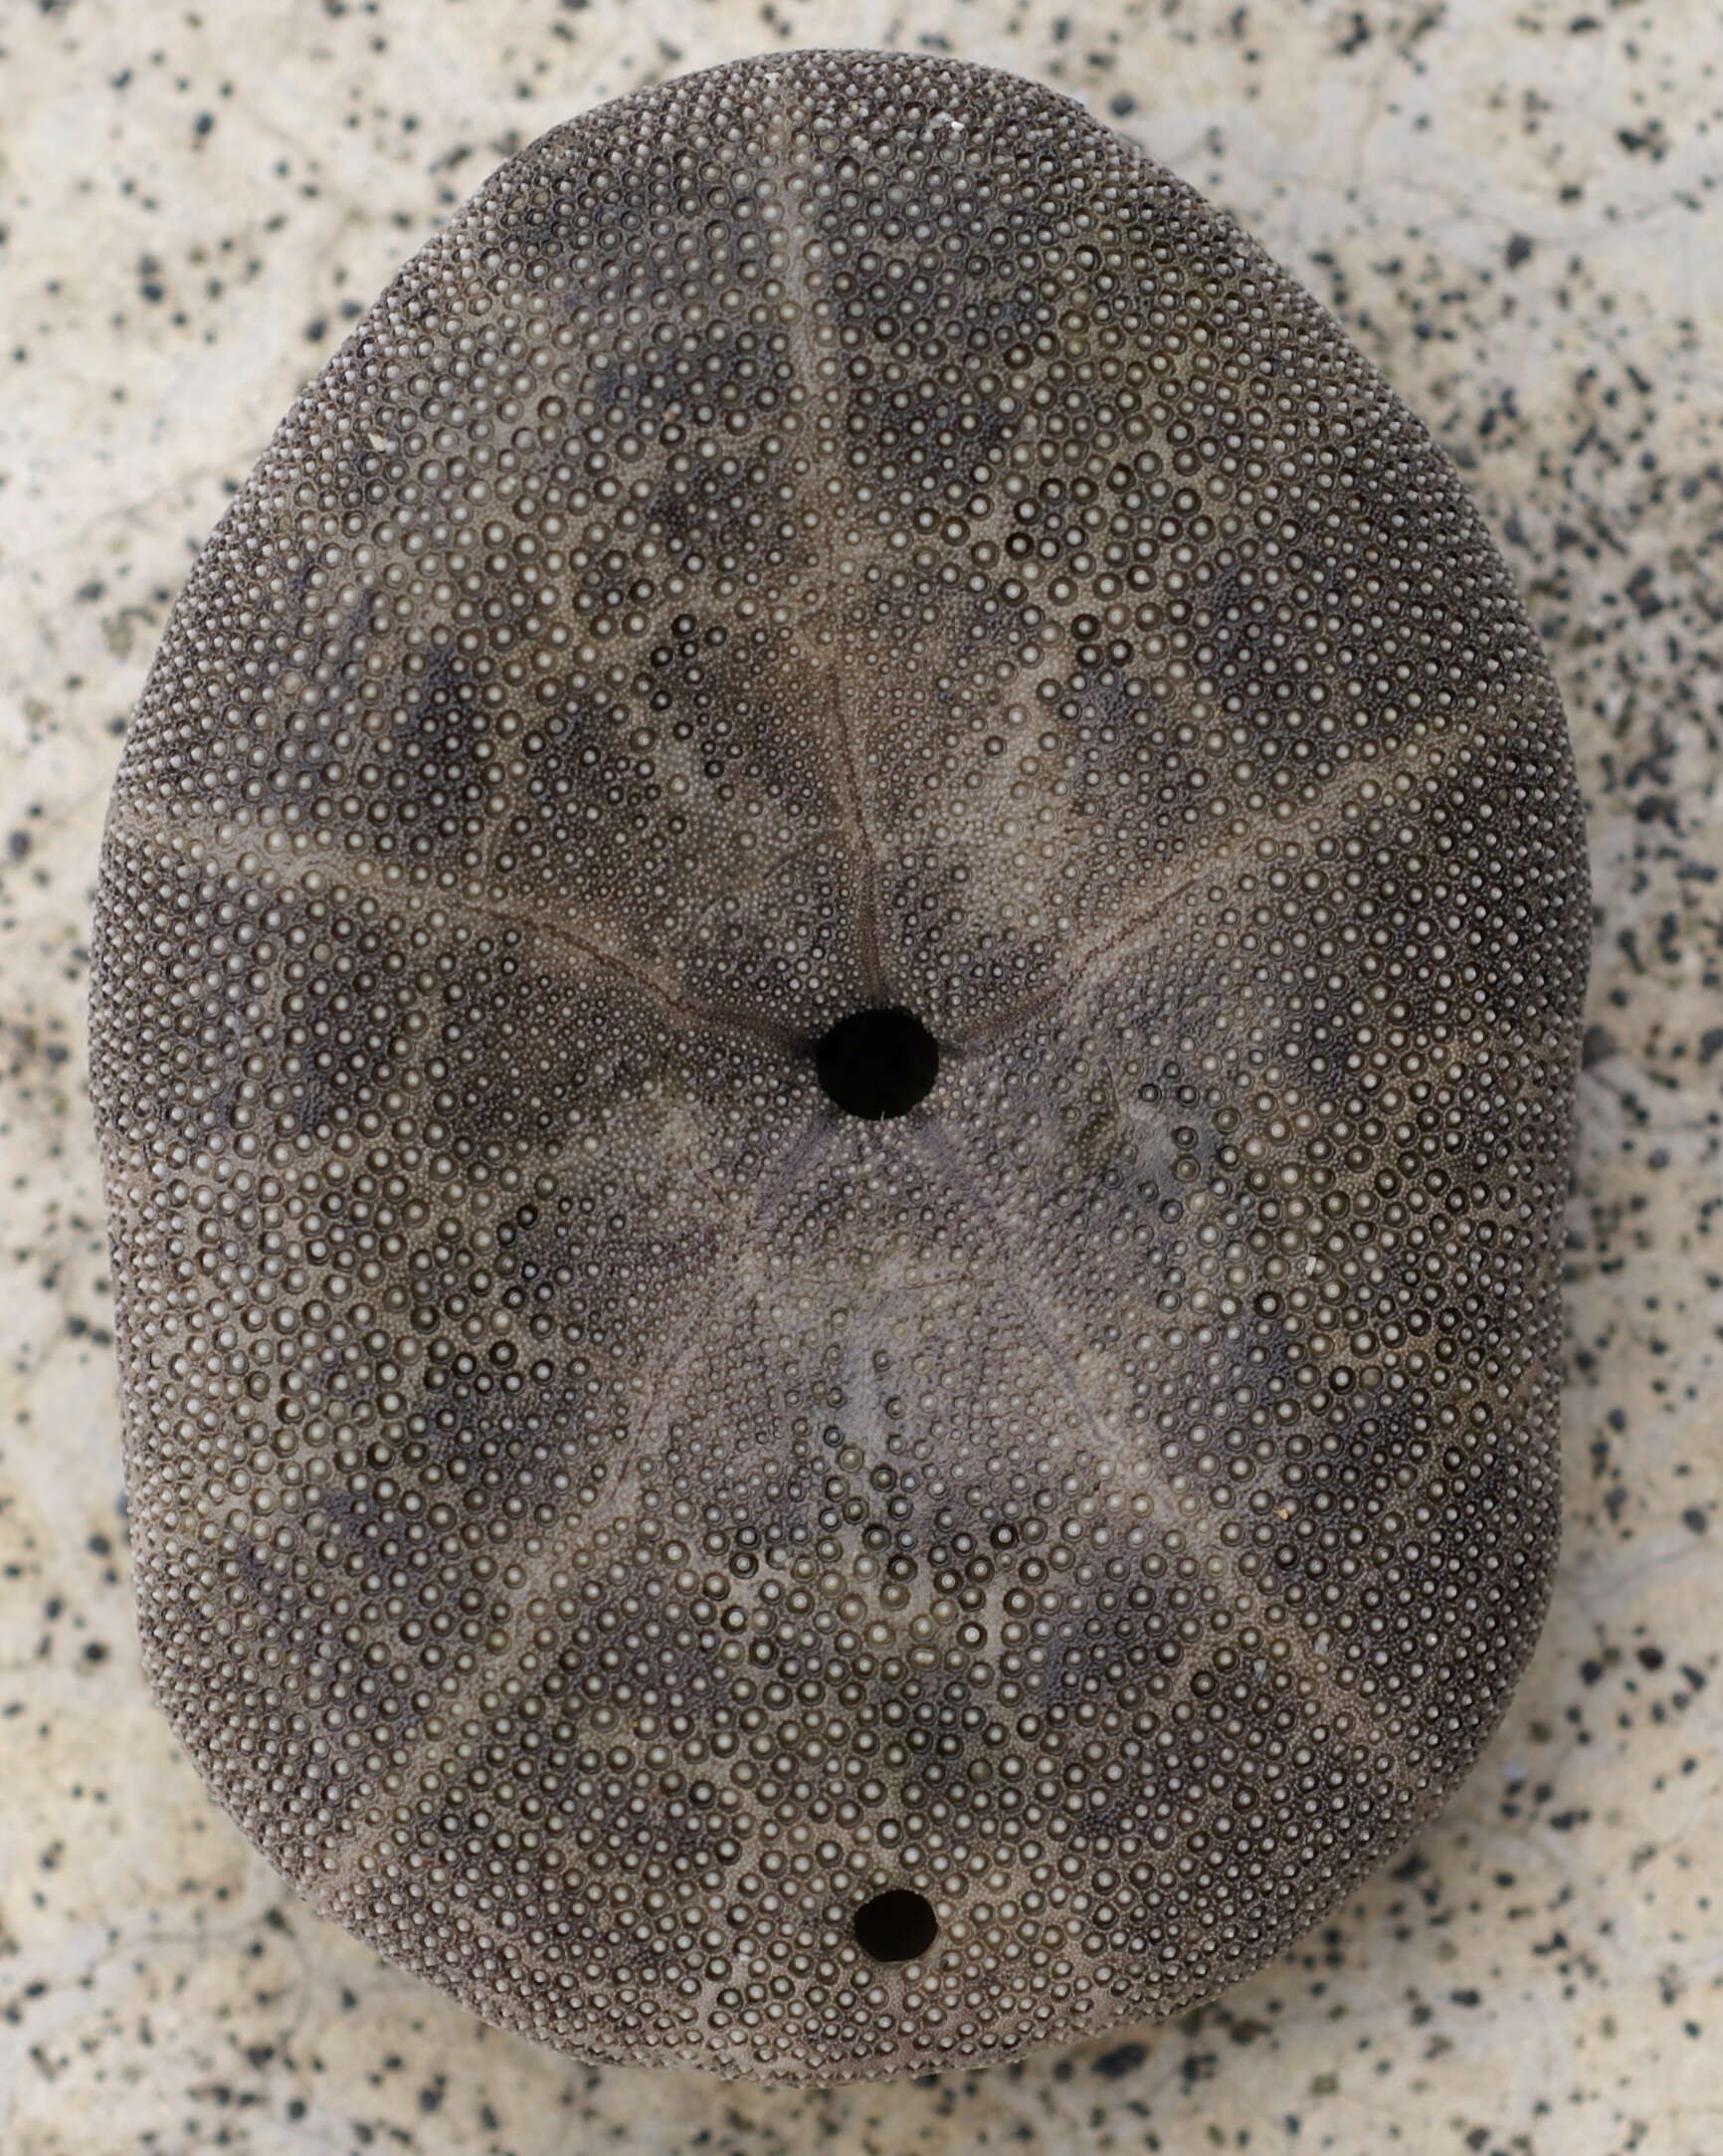 Image de Clypeaster reticulatus (Linnaeus 1758)